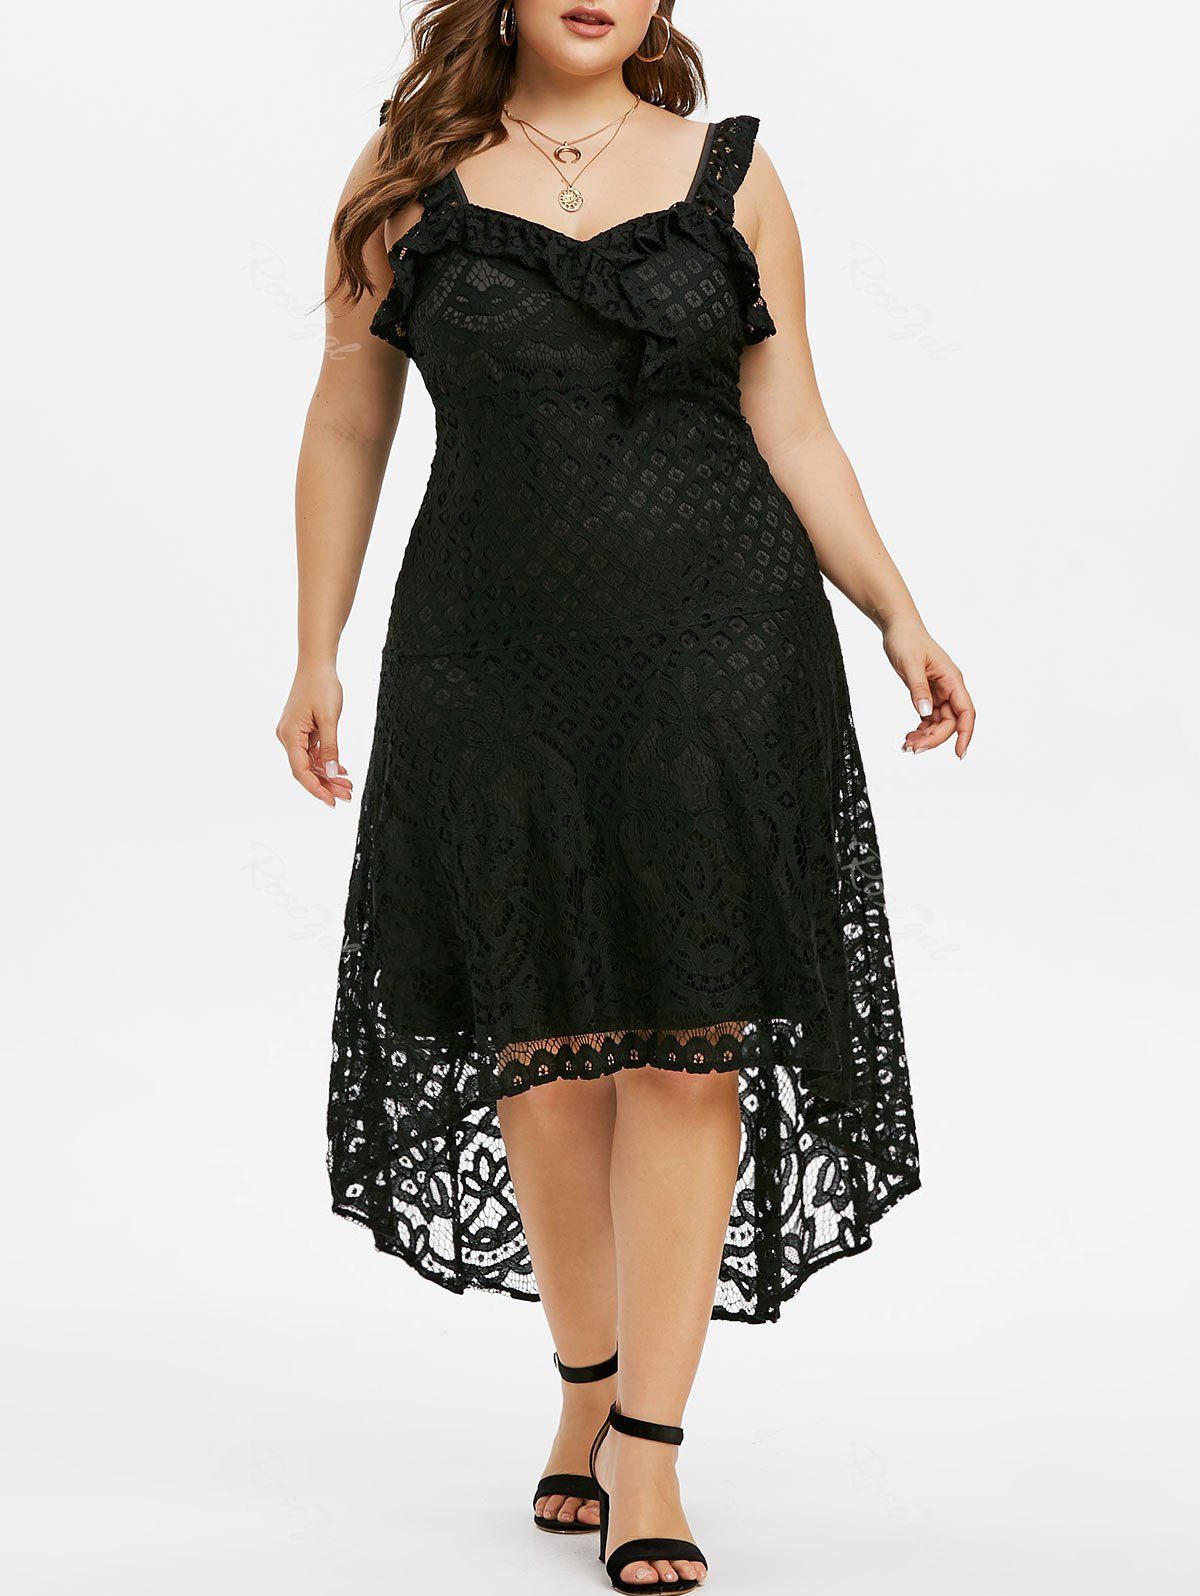 black lace high low dress plus size